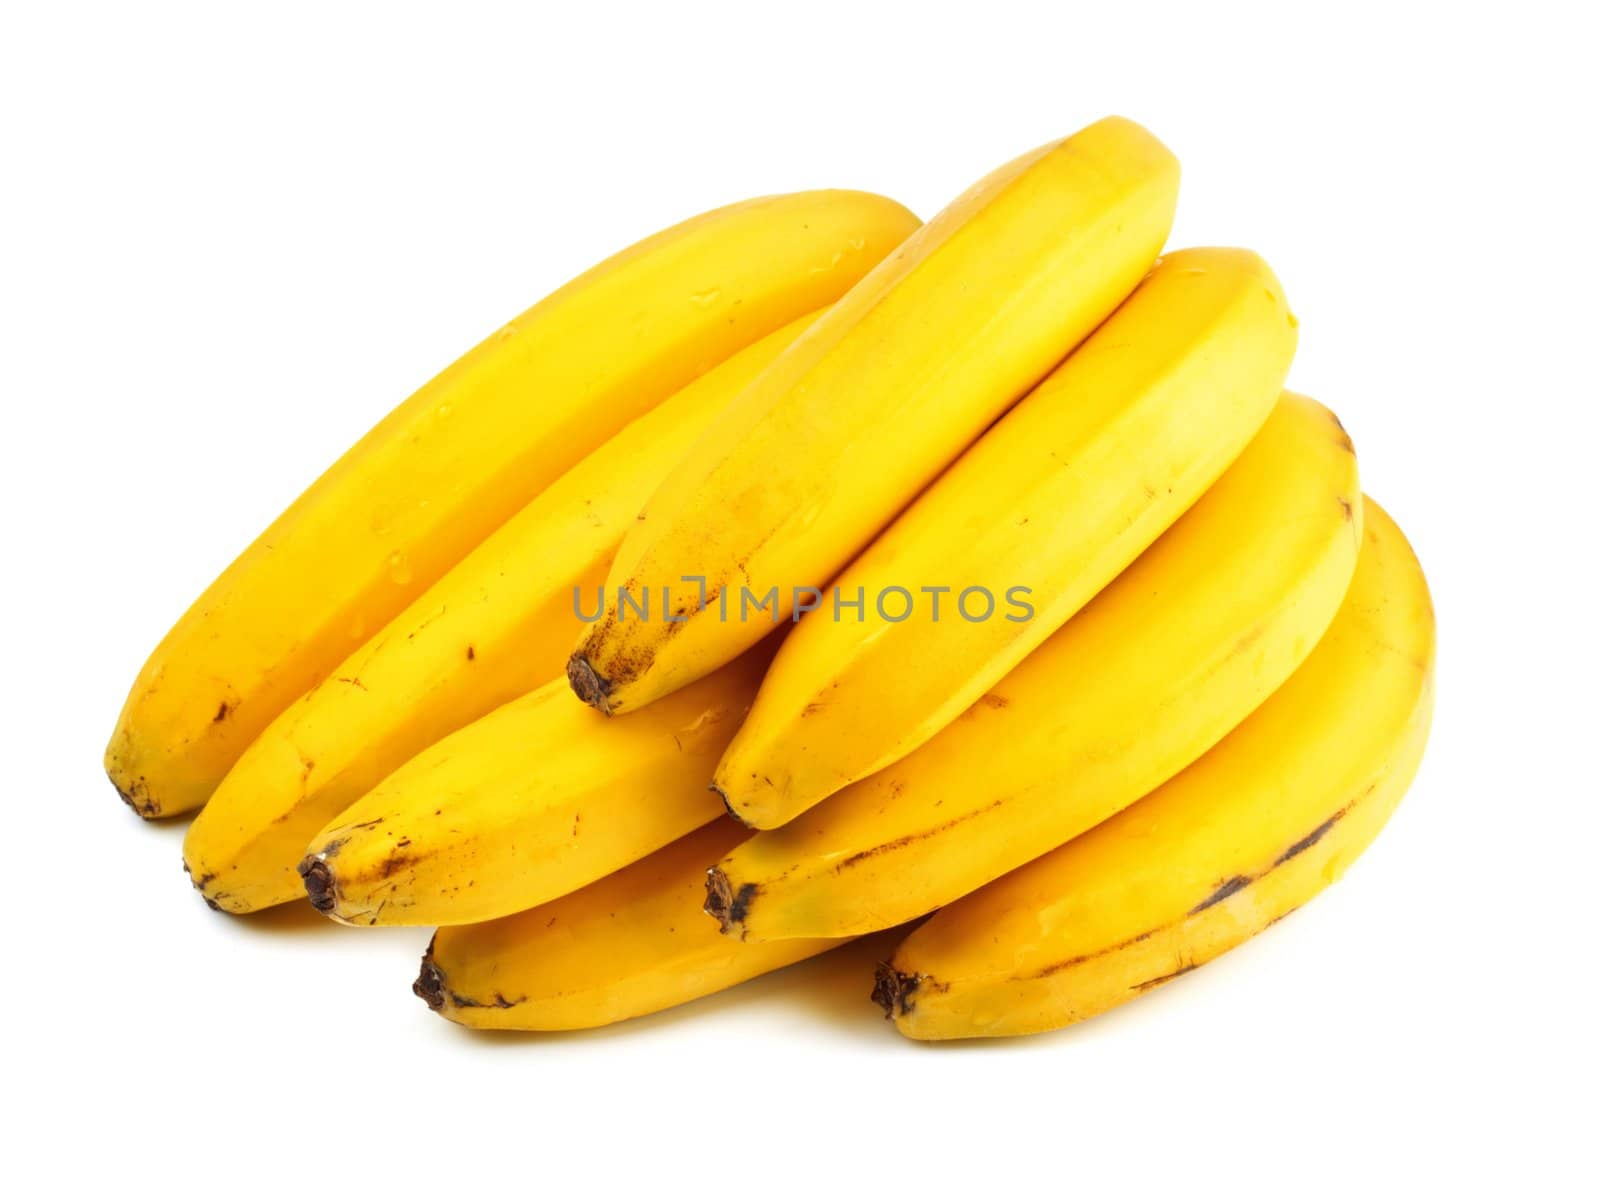 bunch of bananas by petr_malyshev